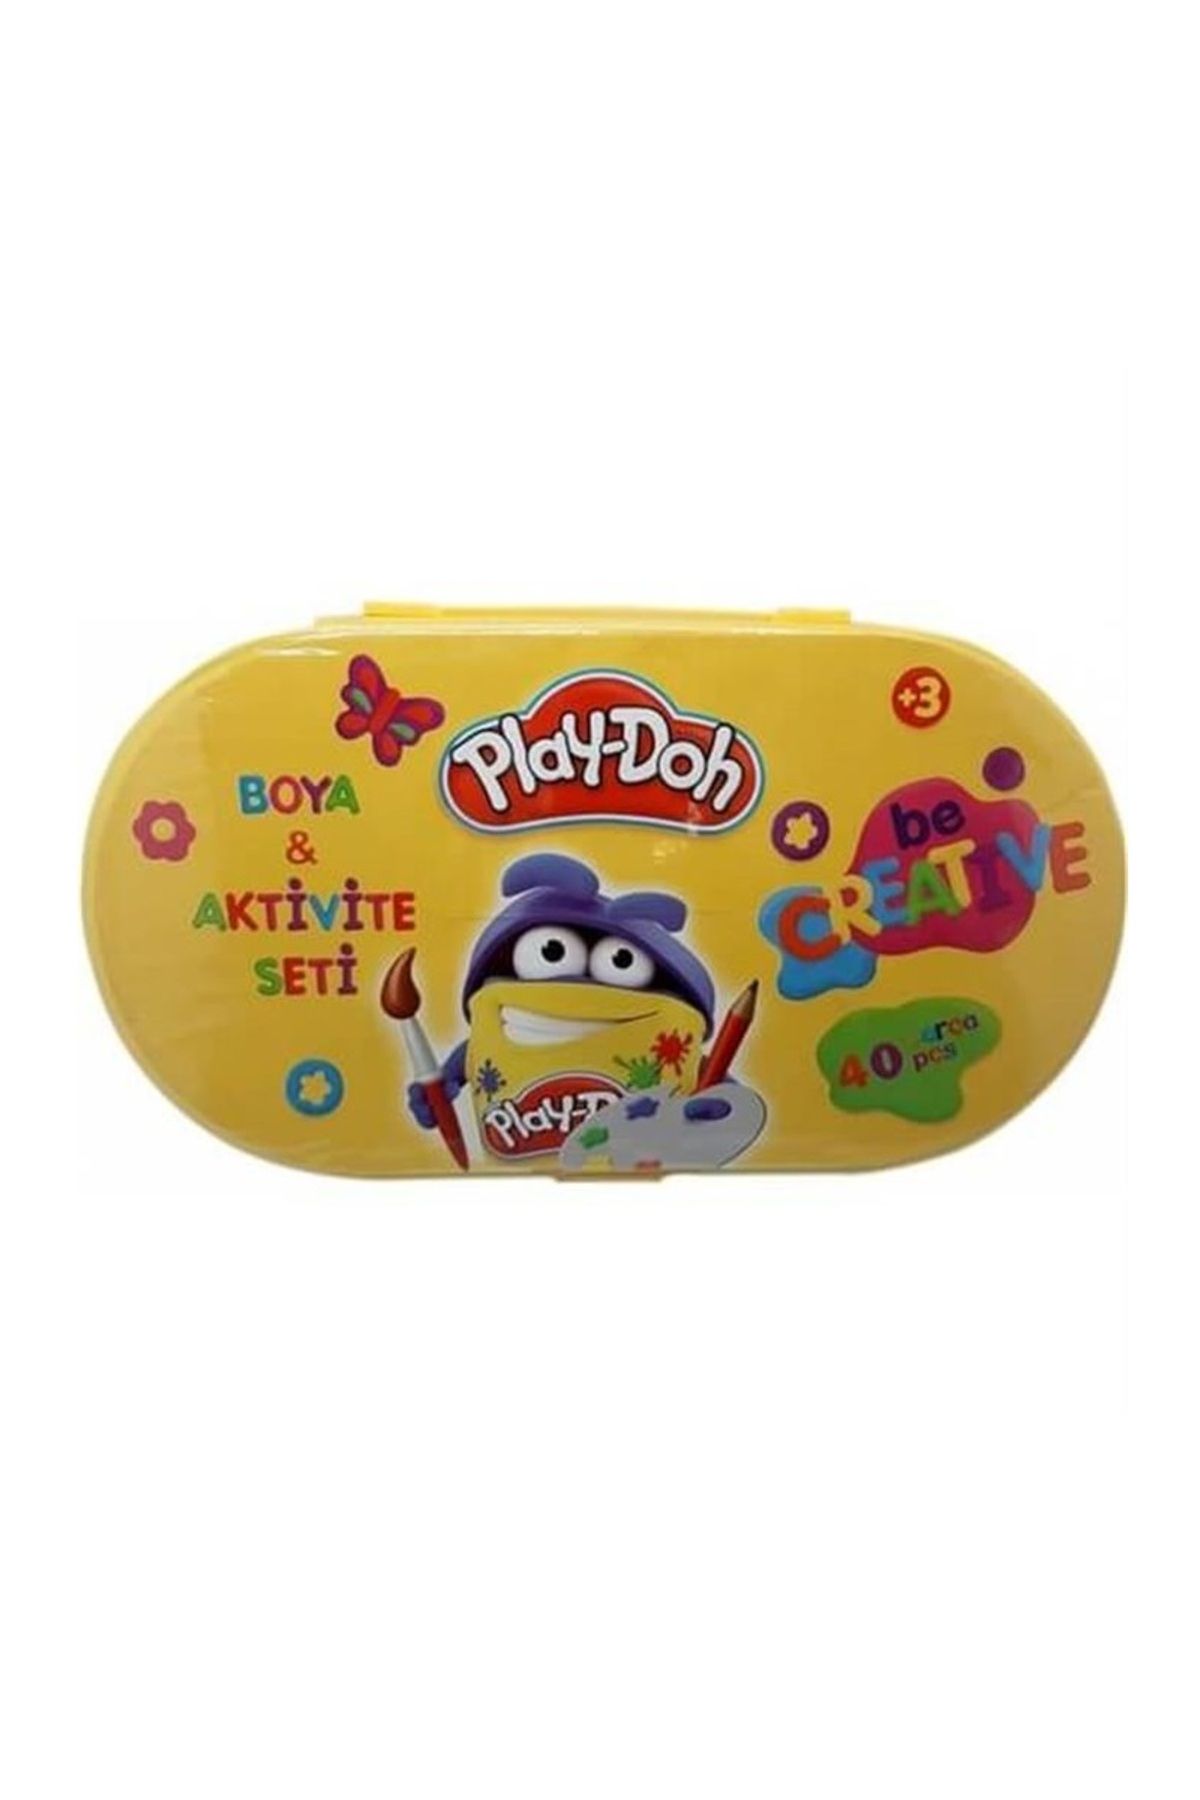 Play Doh Play-doh Kırtasiye Seti 40 Parça St001